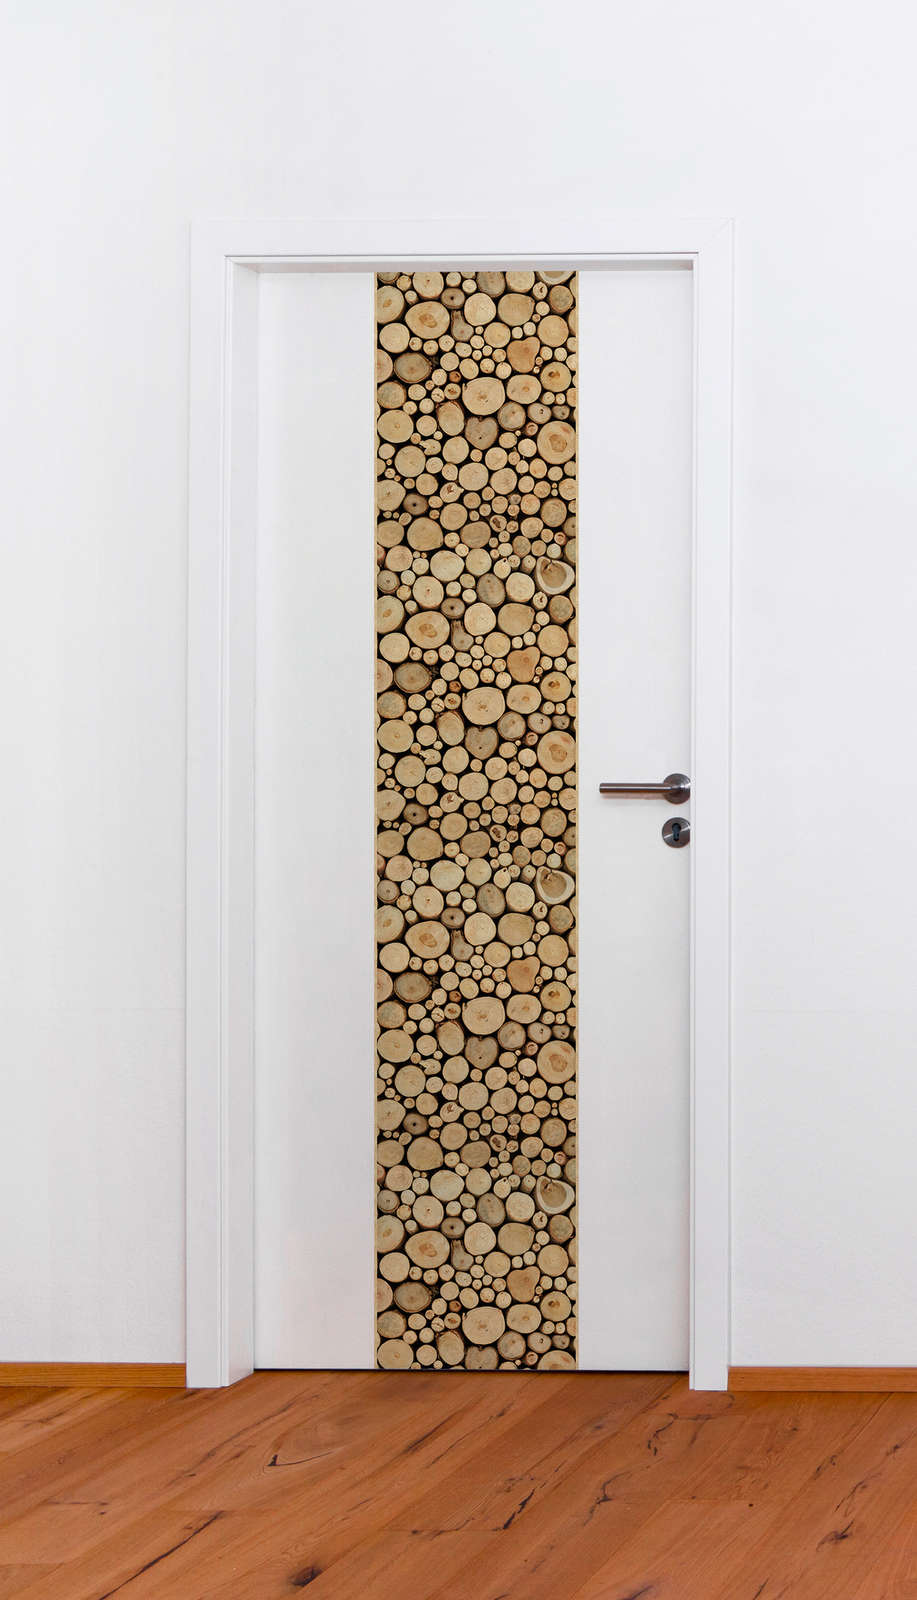             Motif wallpaper with woods in cross section - brown, beige
        